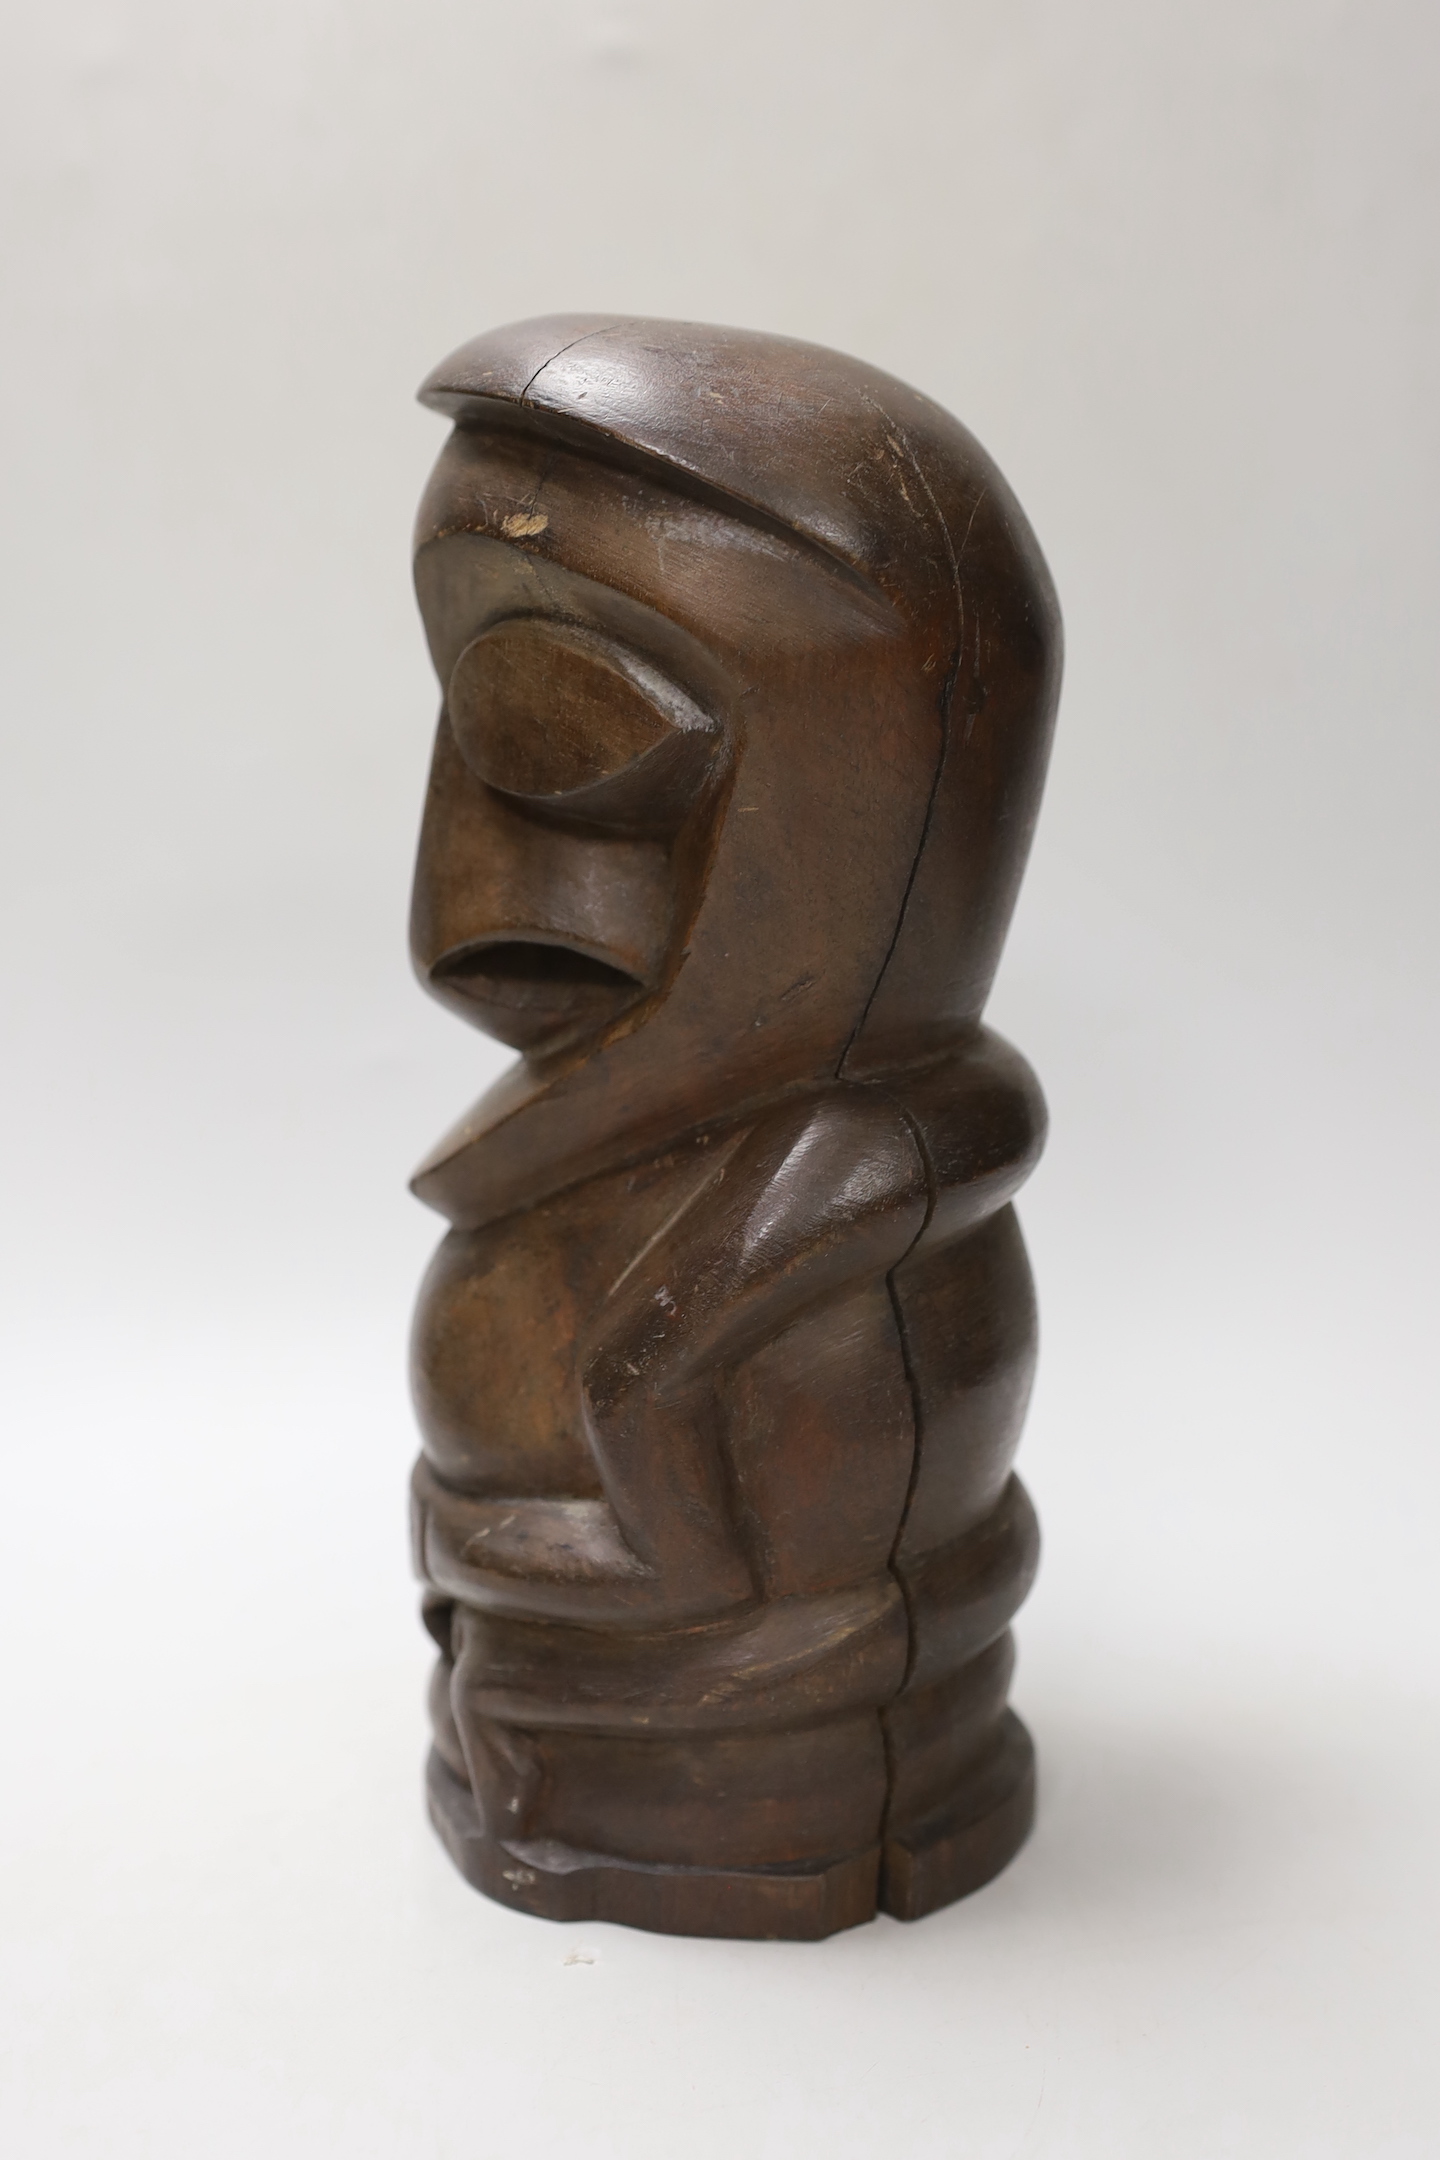 A Maori-type carved hardwood totem figure, 26cm high